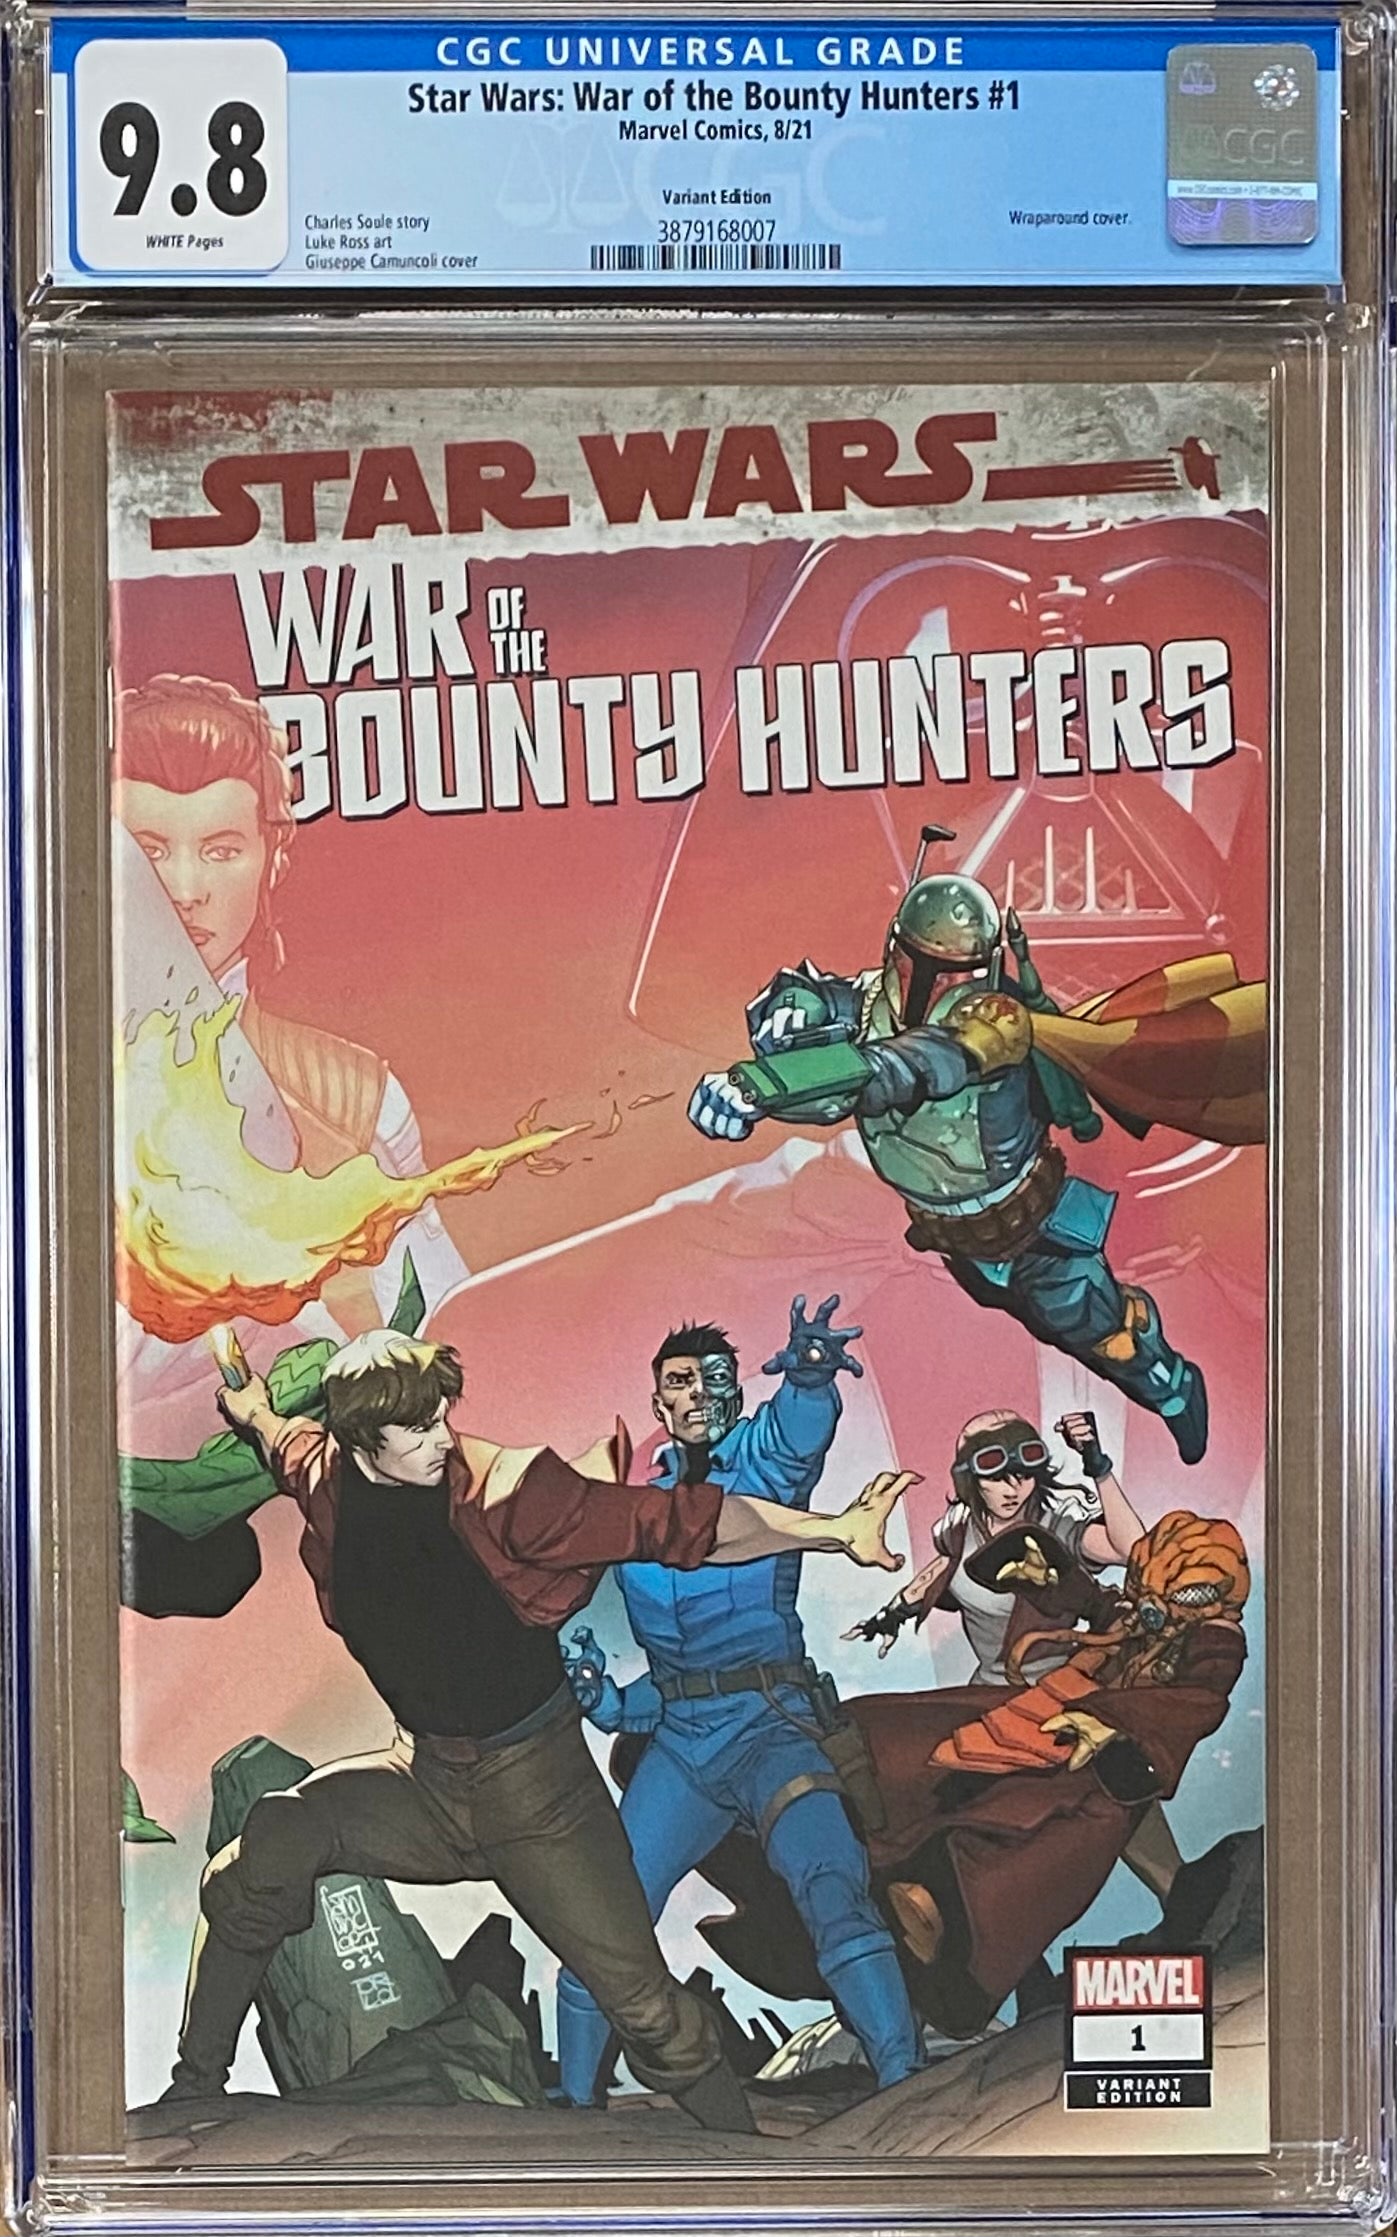 Star Wars: War of the Bounty Hunters #1 Wraparound Variant CGC 9.8